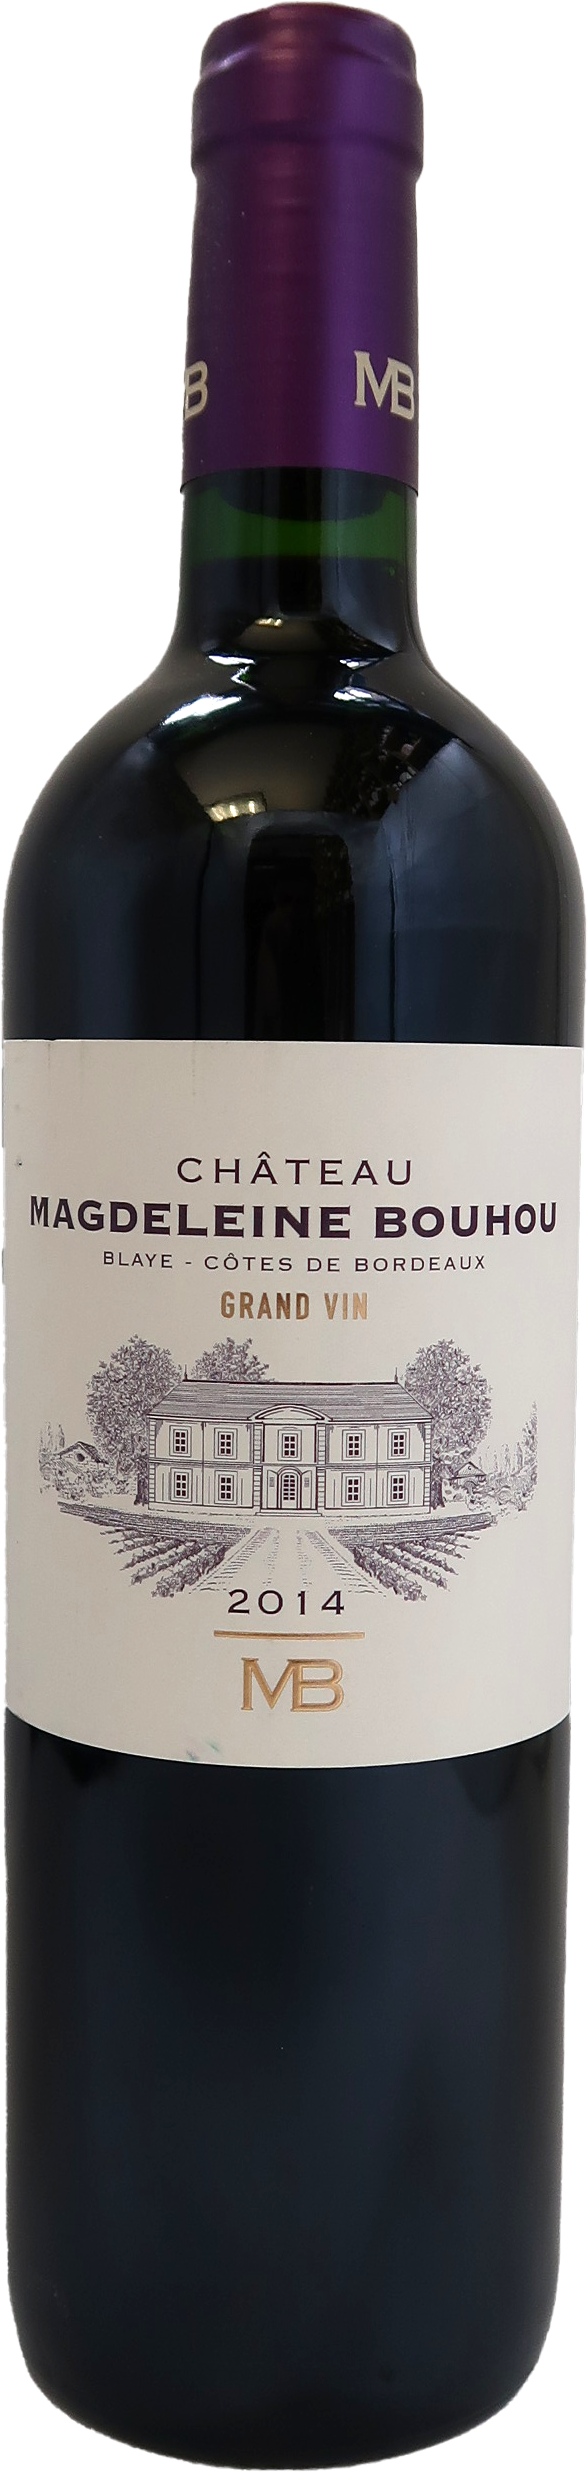 Château Magdeleine Bouhou - Grand Vin 2014